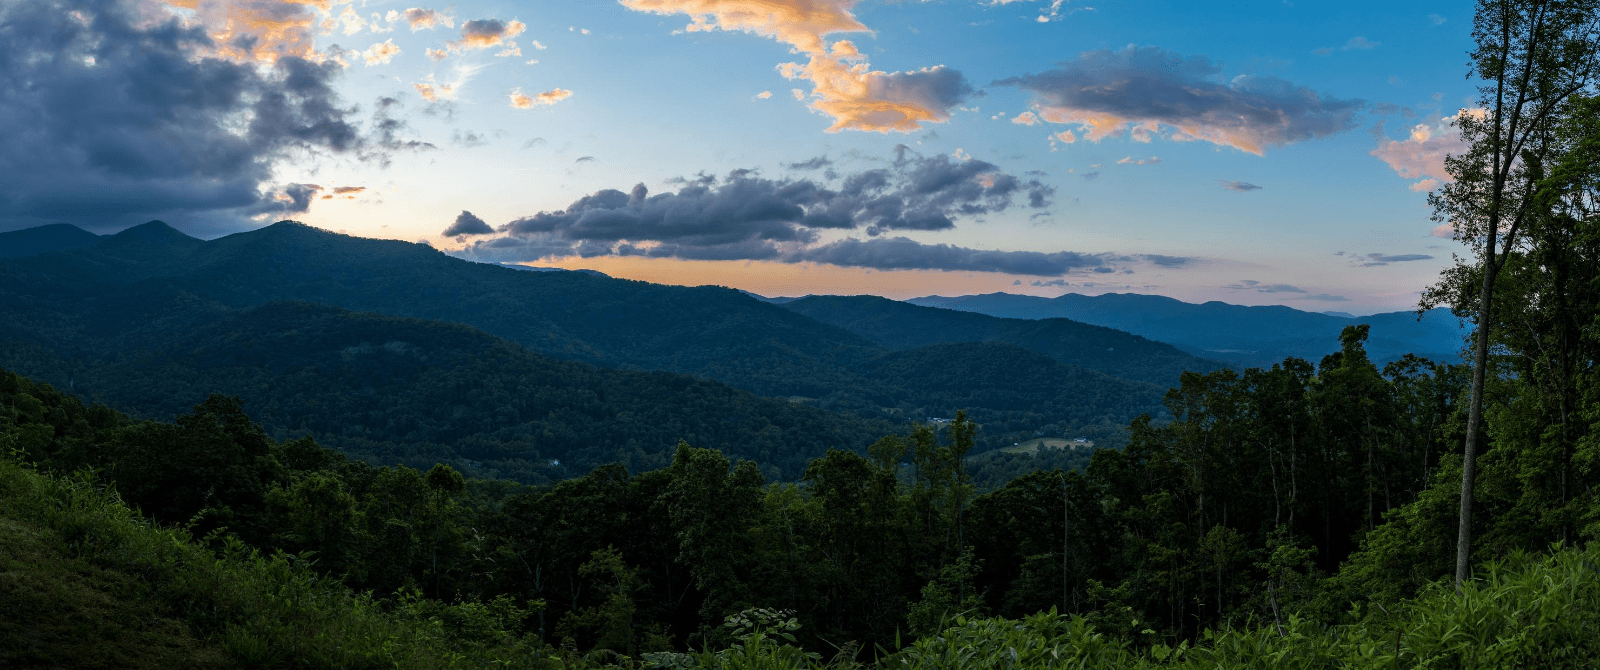 North Carolina countryside